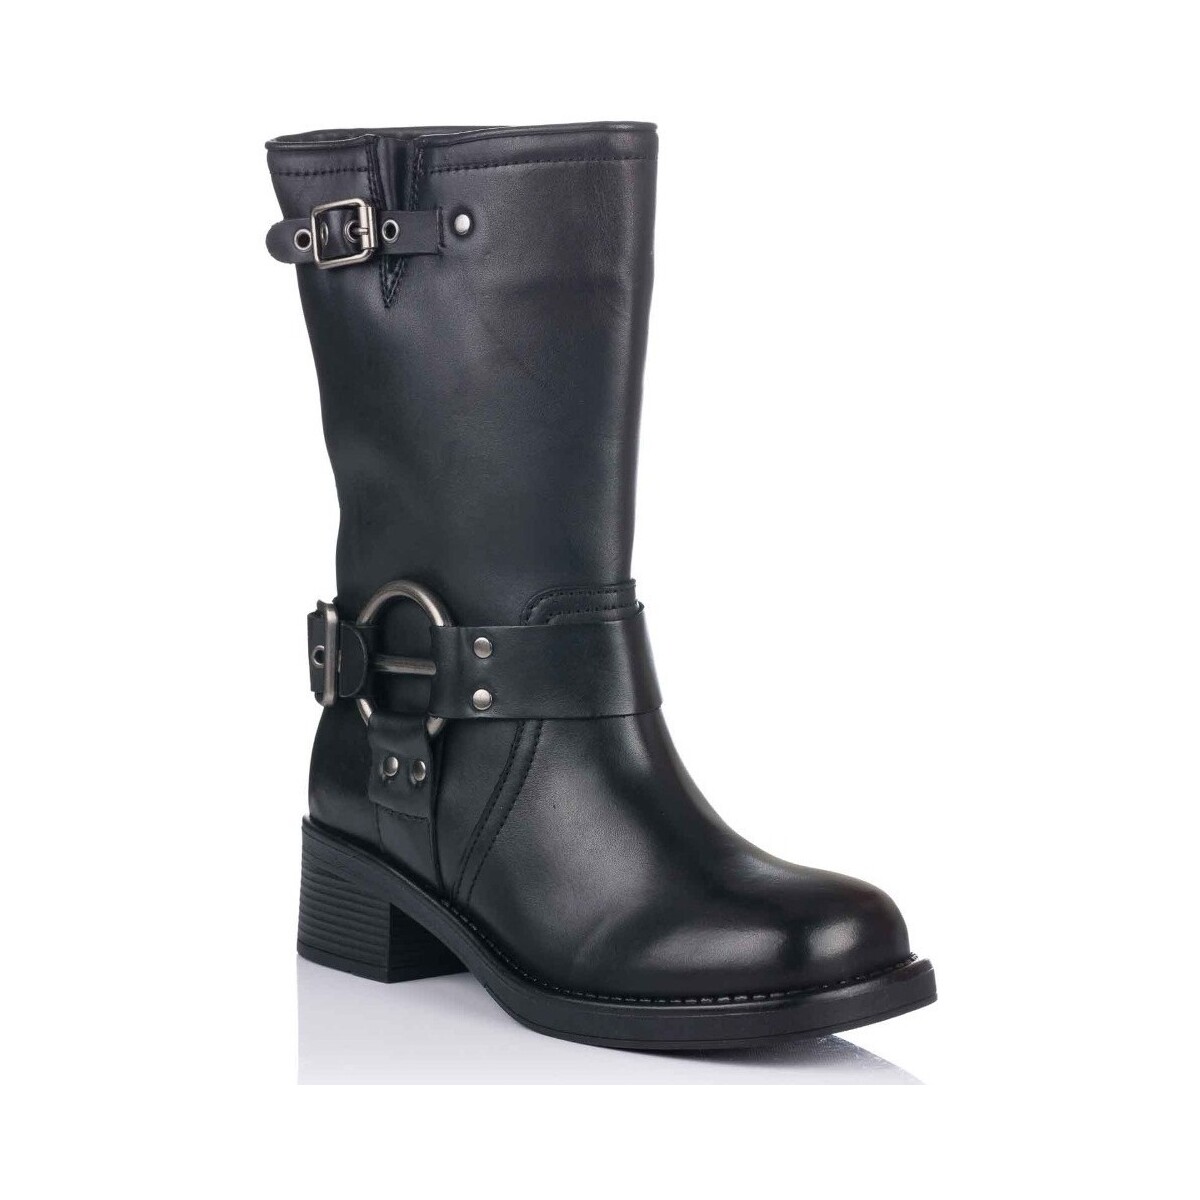 Chaussures Femme Slip-on Boots Lol 7176 Noir